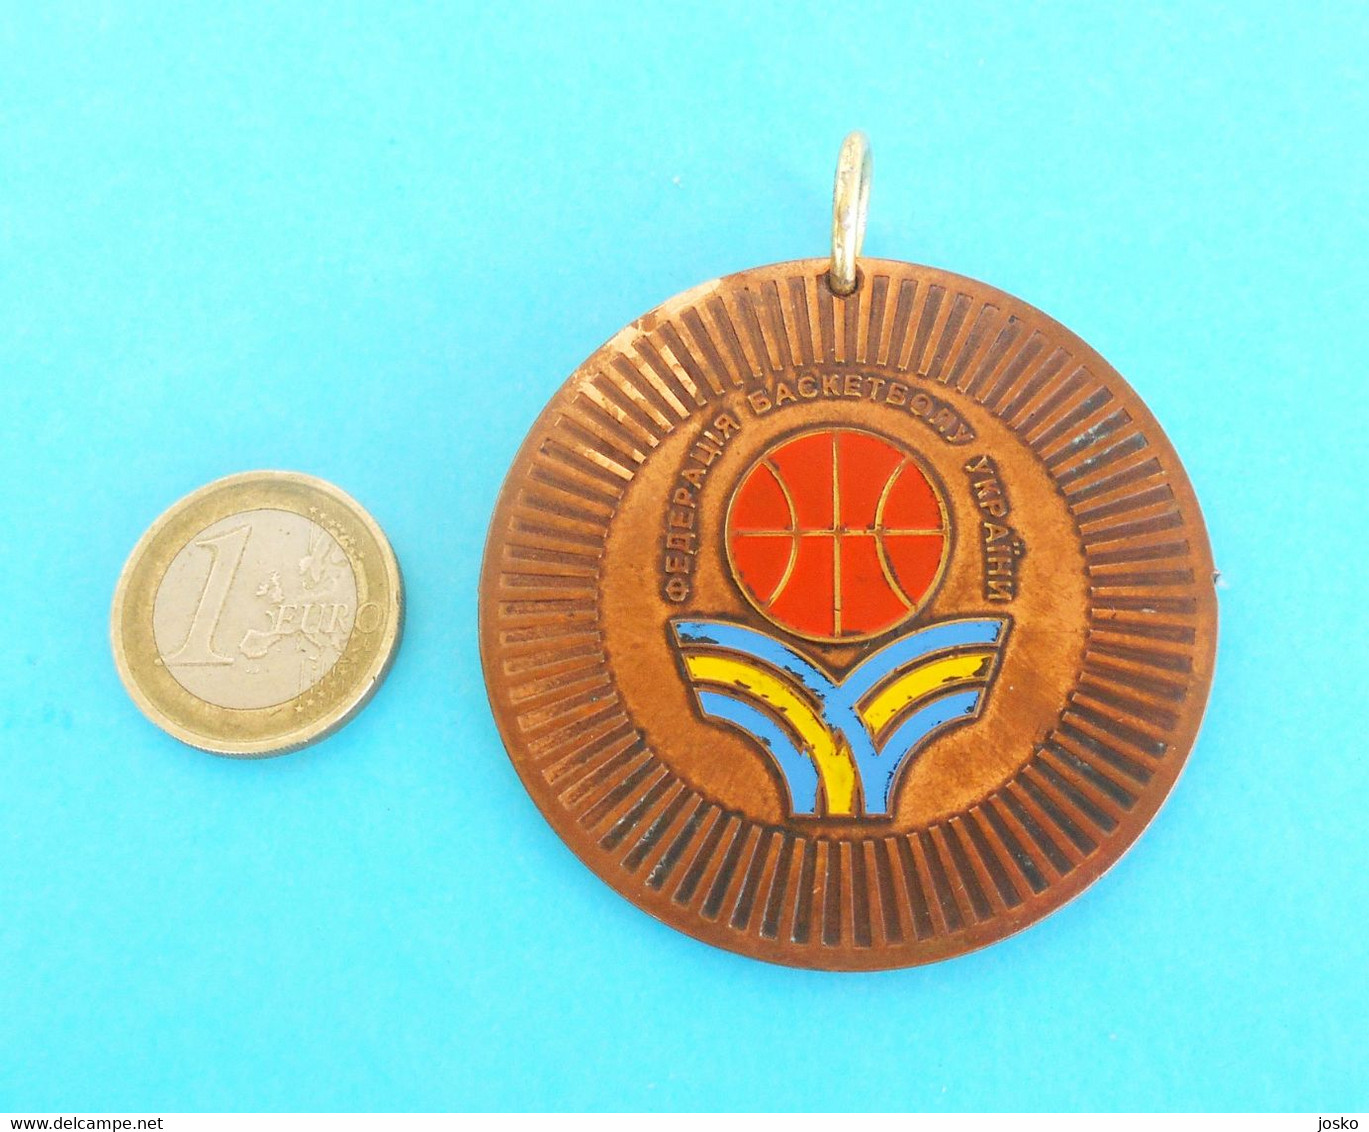 UKRAINE BASKETBALL FEDERATION (2006) Nice Old Medal For Winning 3rd Place * Basket-ball Pallacanestro Baloncesto Ukraina - Uniformes, Recordatorios & Misc